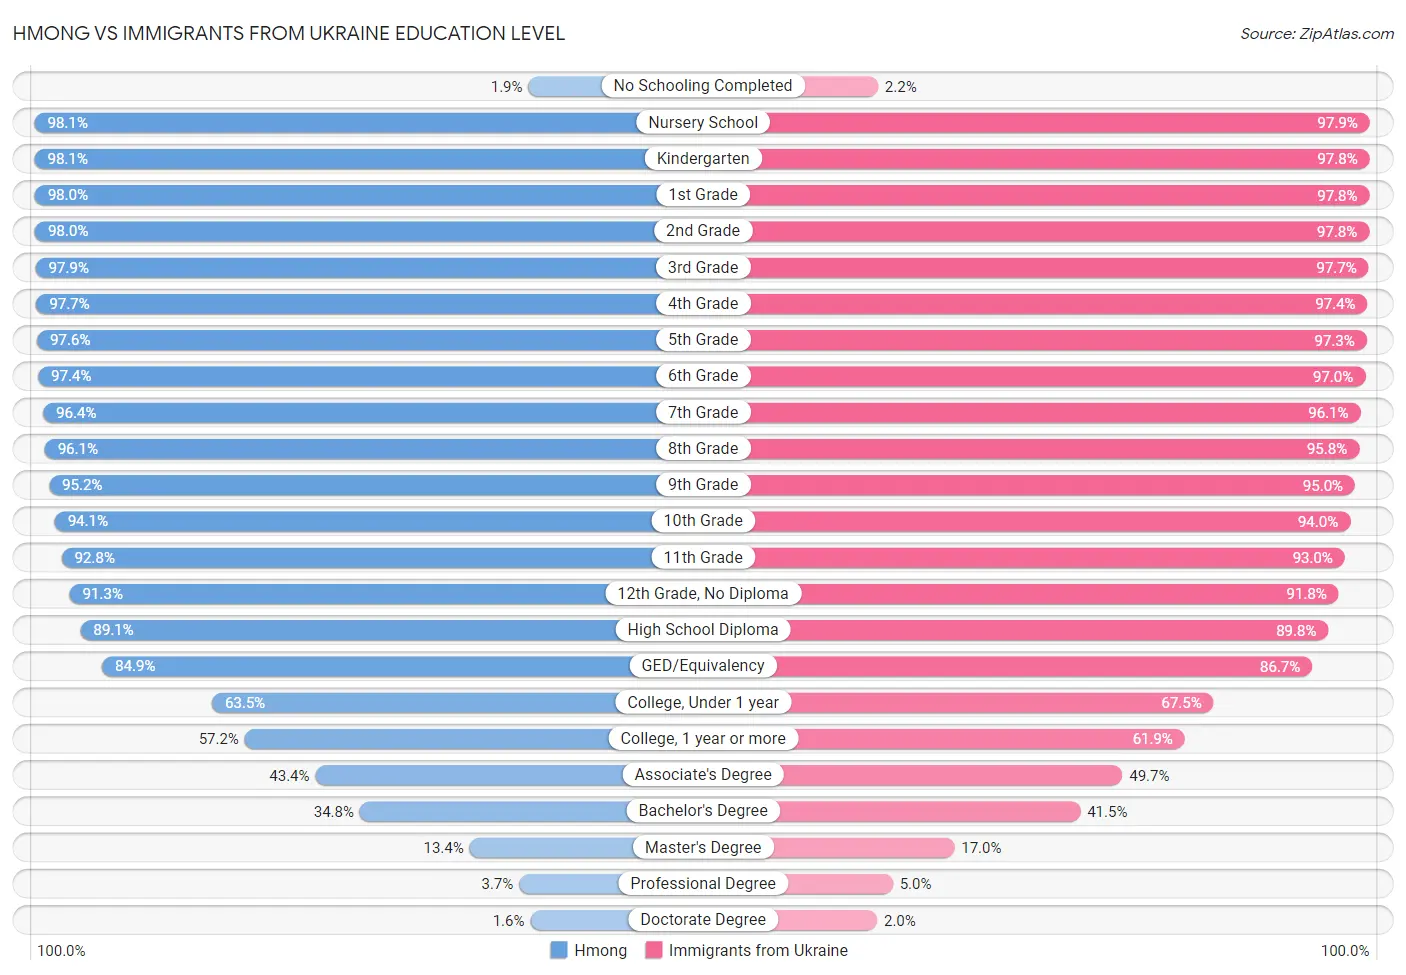 Hmong vs Immigrants from Ukraine Education Level